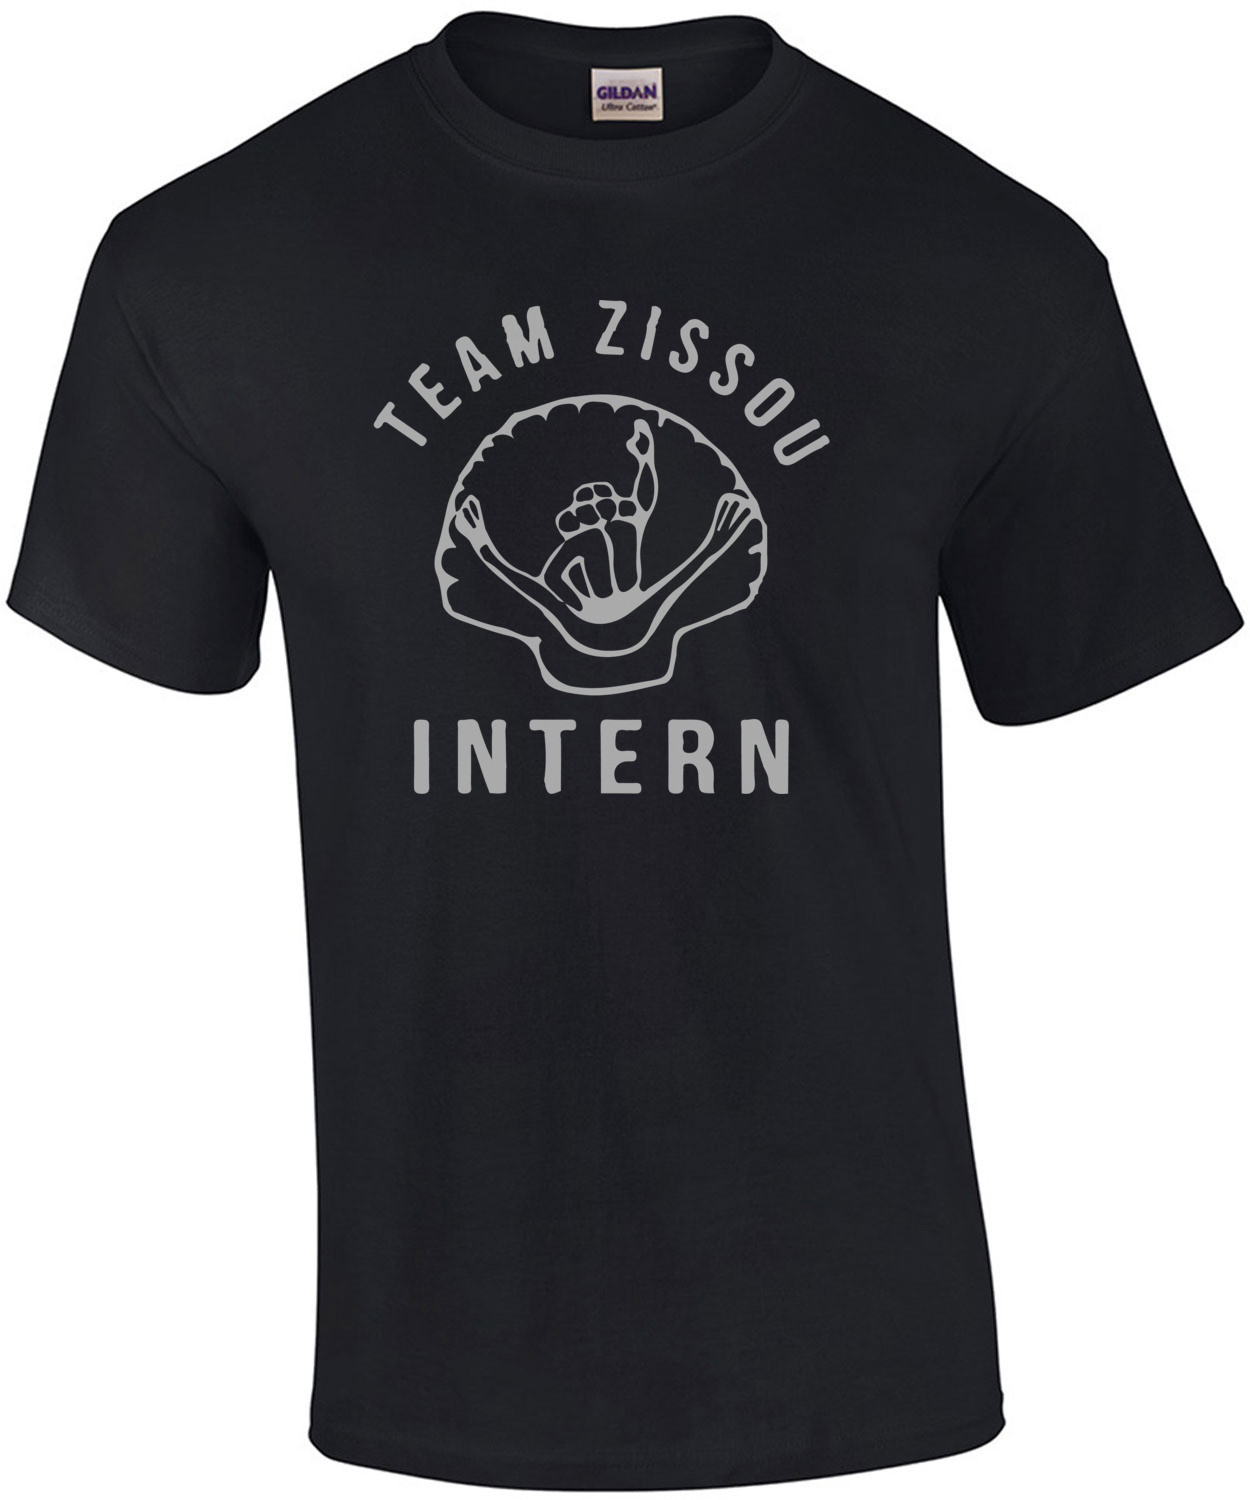 Team Zissou Intern - The Life Aquatic with Steve Zissou